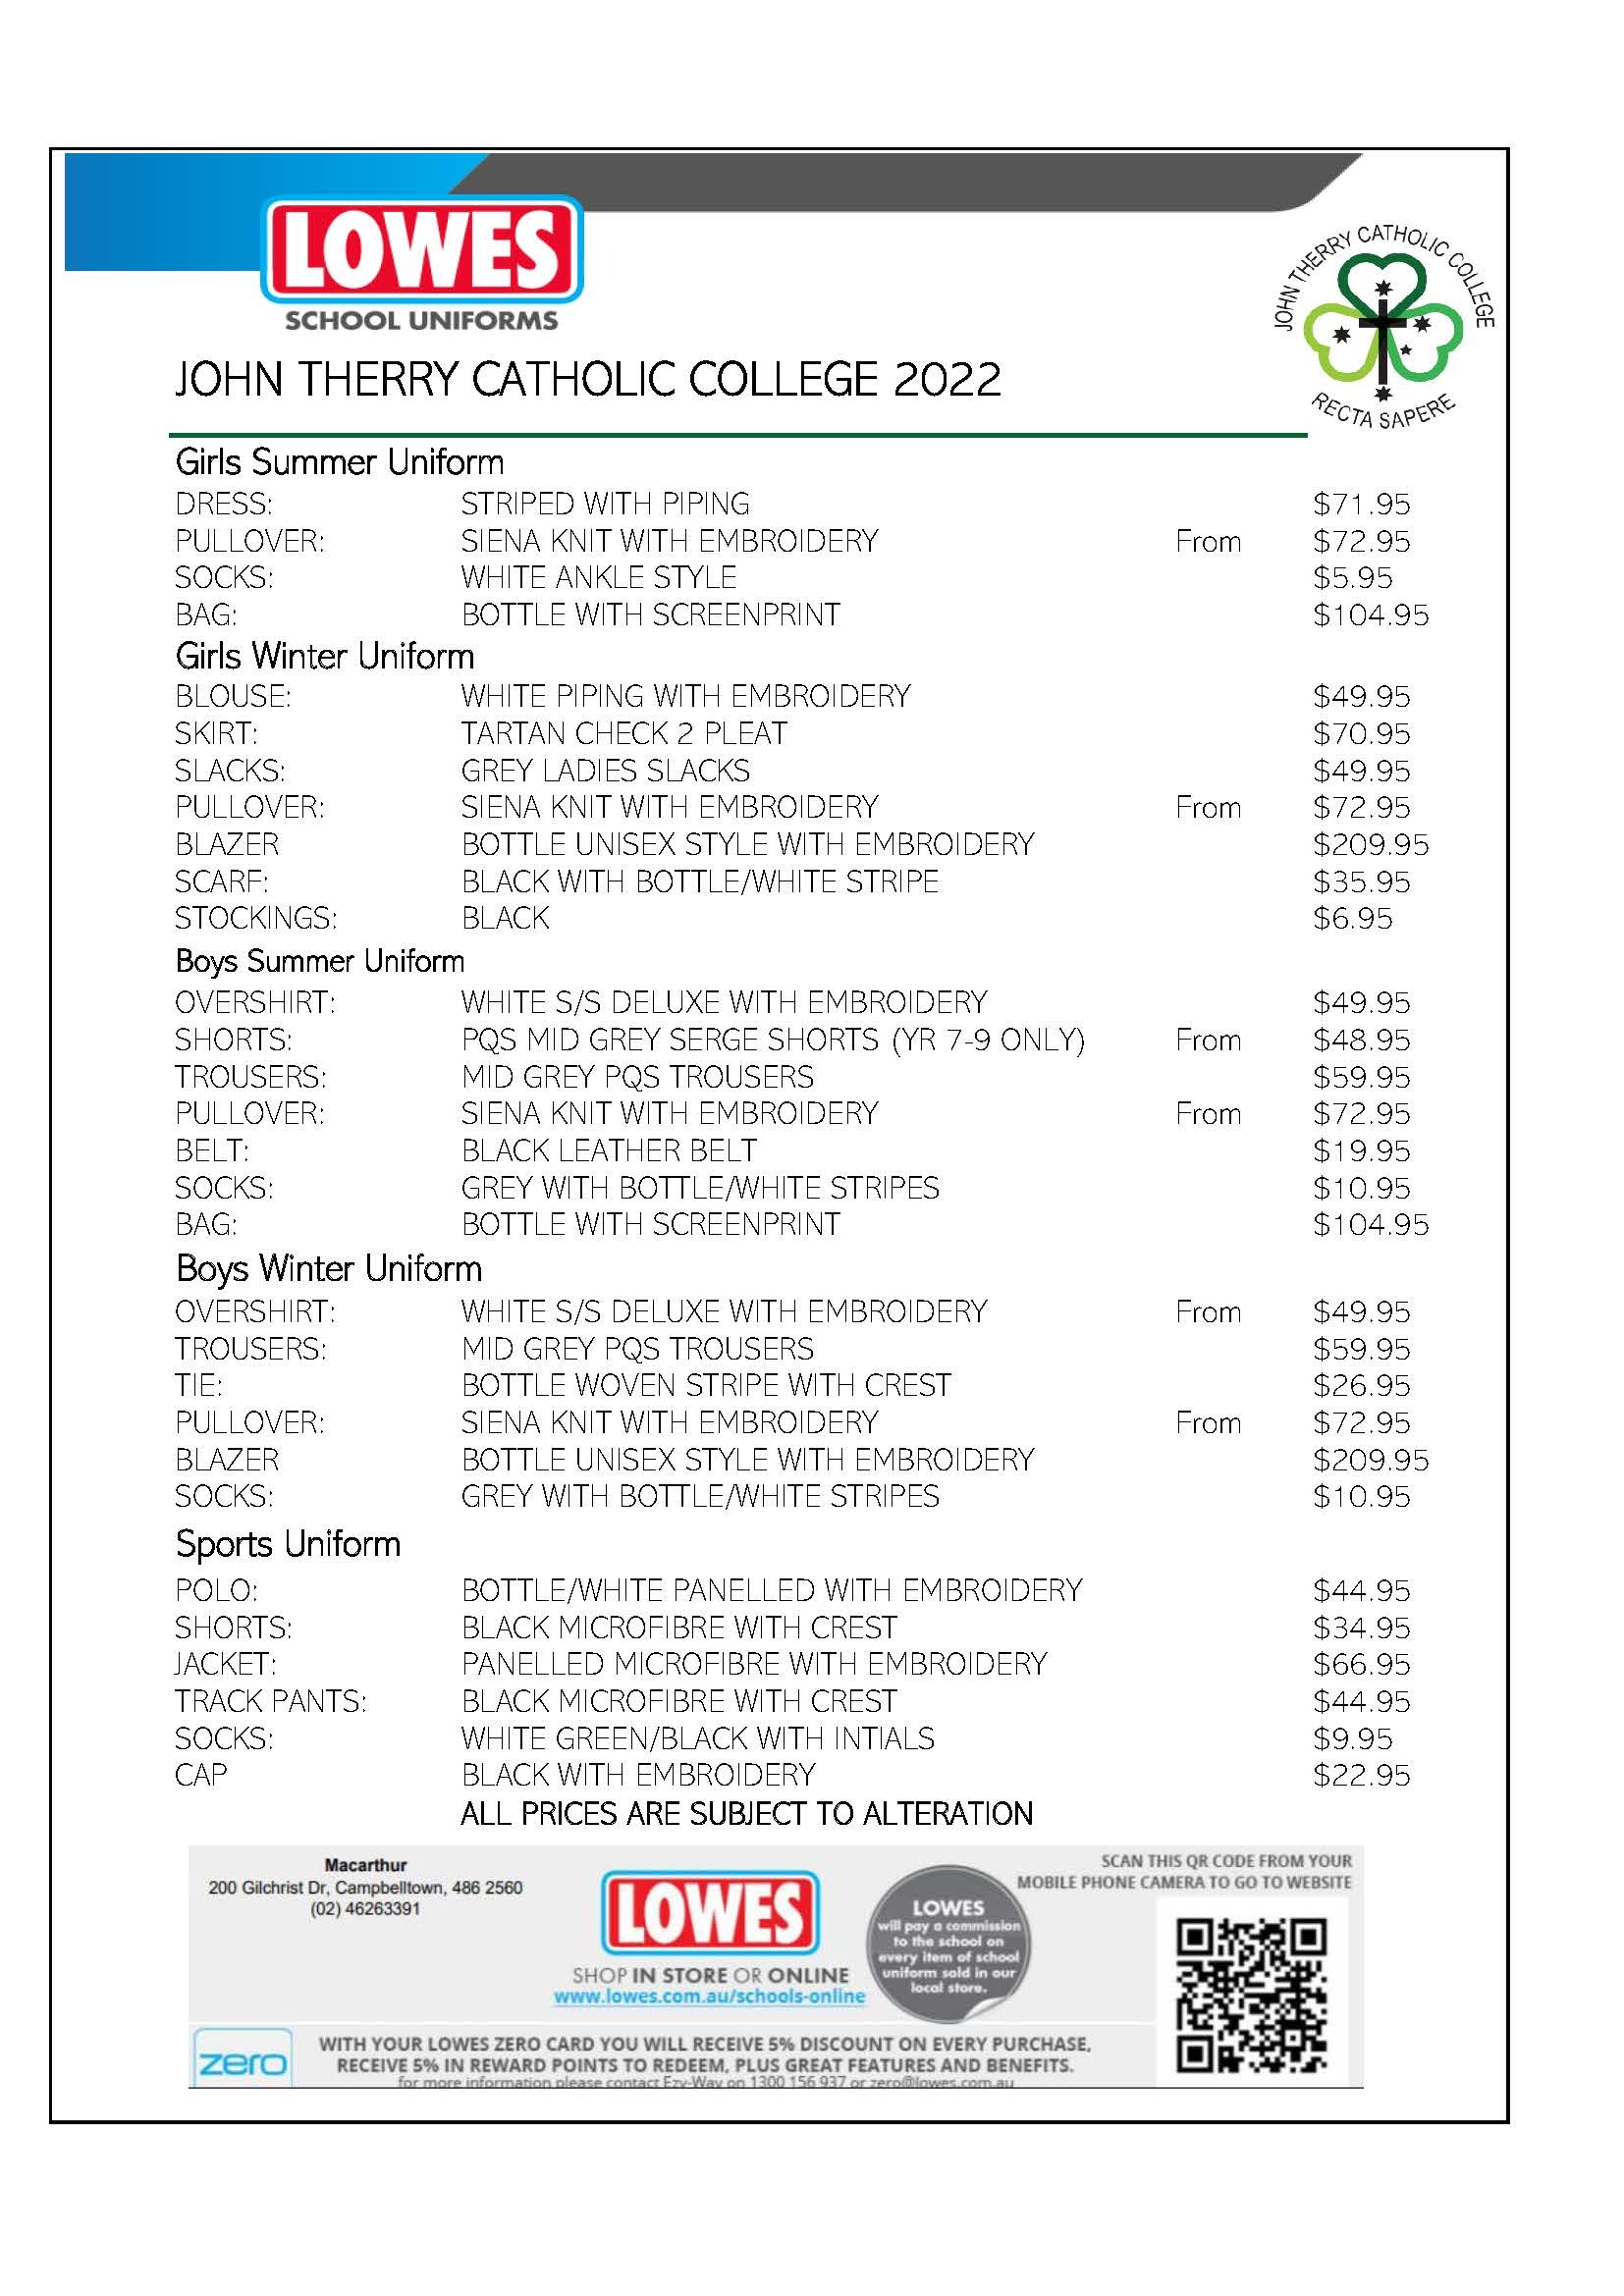 2022 PRICE LIST - John Therry catholic_Page_1